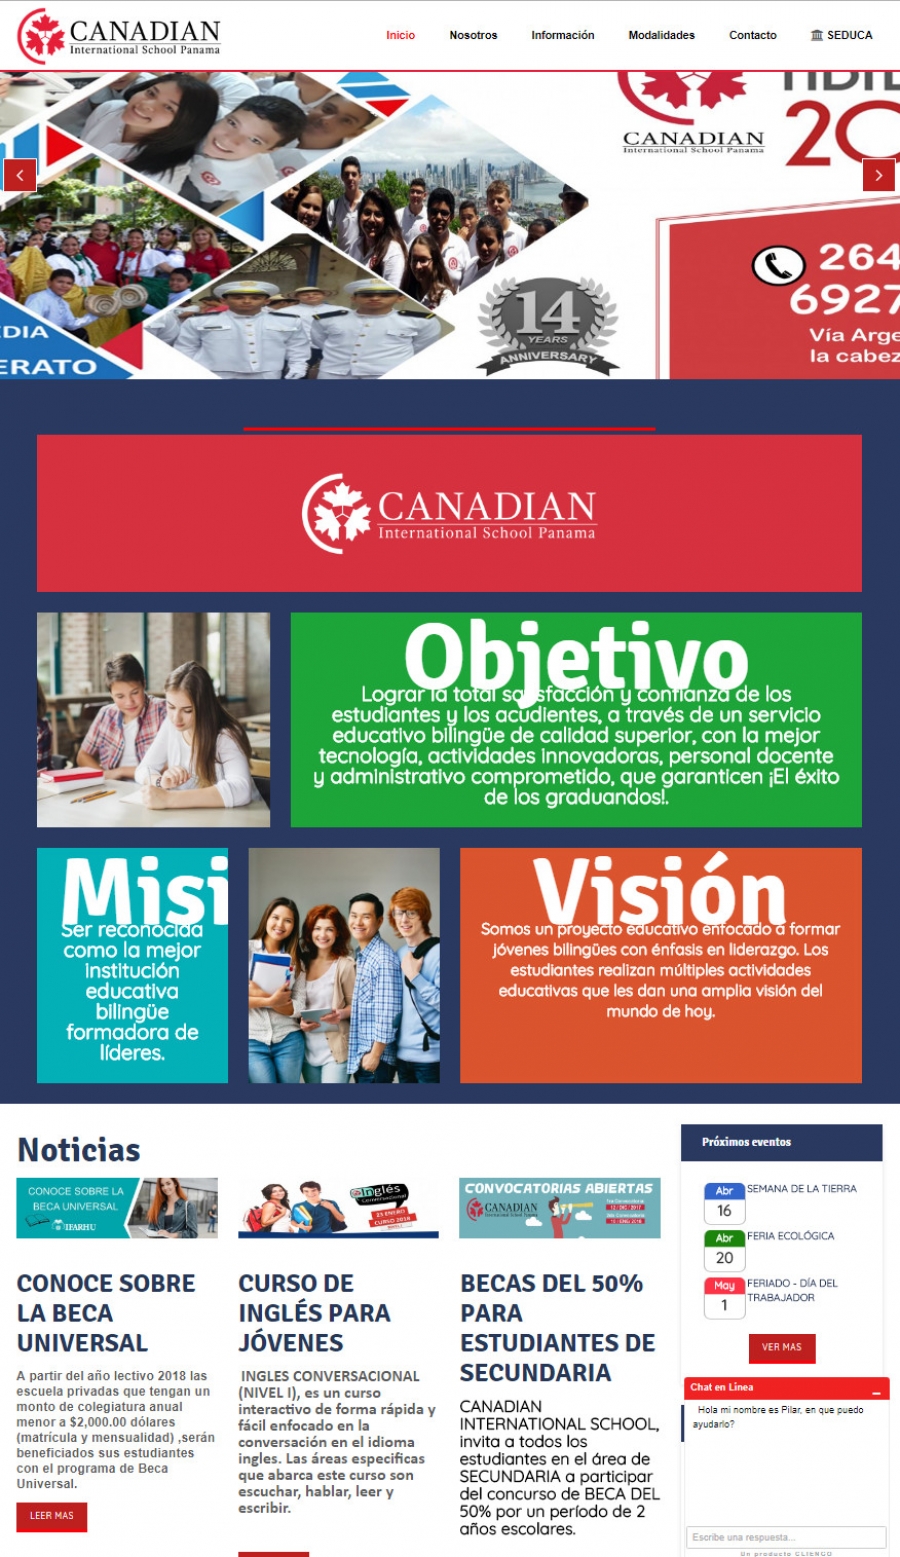 Canadian International School Panama